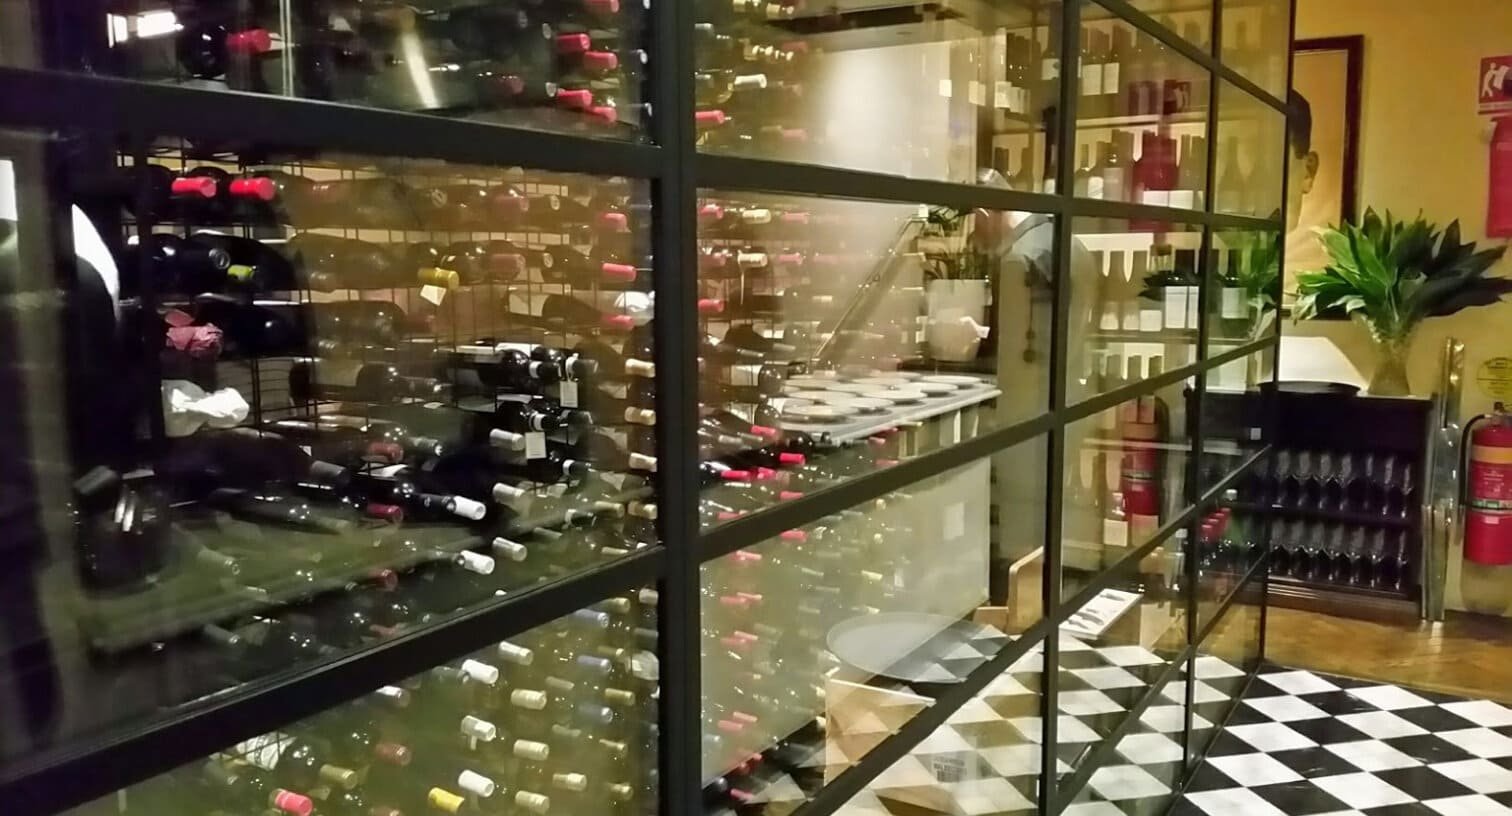 Porteno Restaurant Fixed Windows For Internal Wine Room